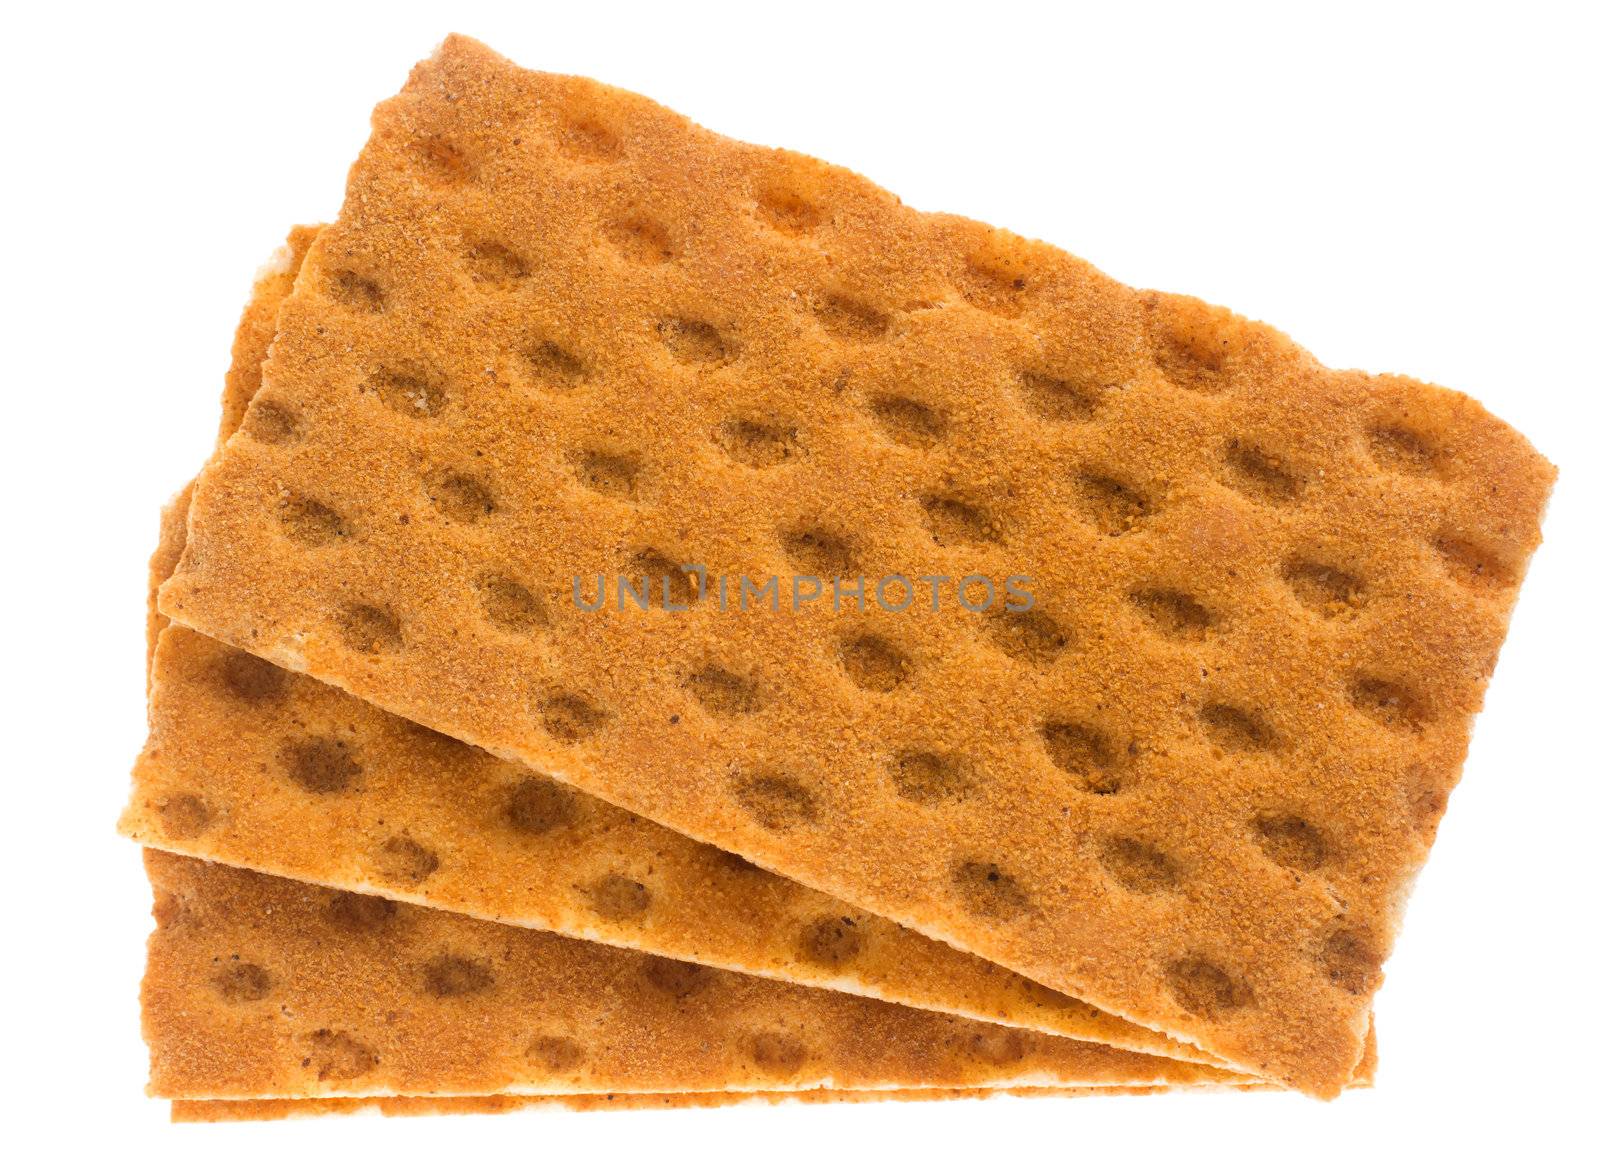 Crackers by tonlammerts